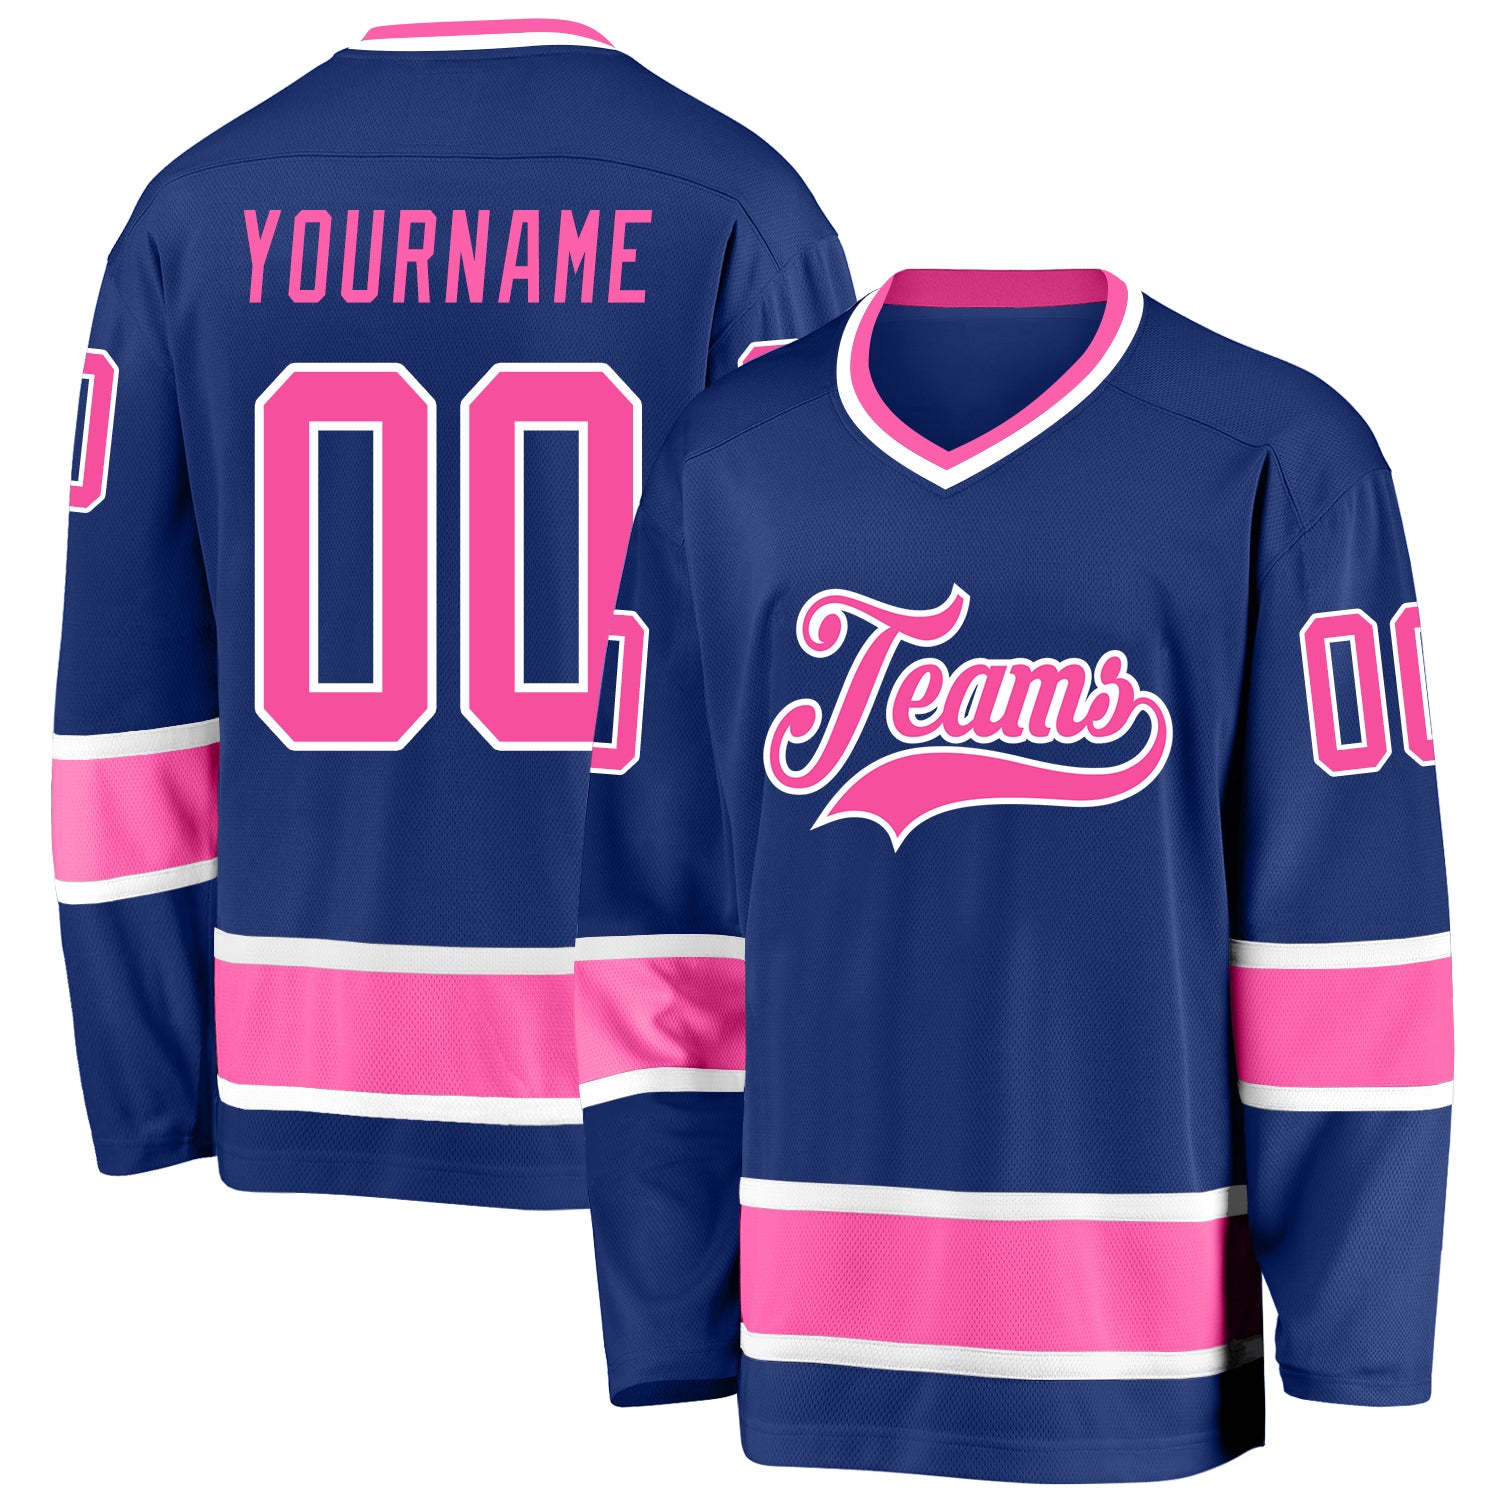 Cheap Custom Pink White-Royal Hockey Jersey Free Shipping – CustomJerseysPro